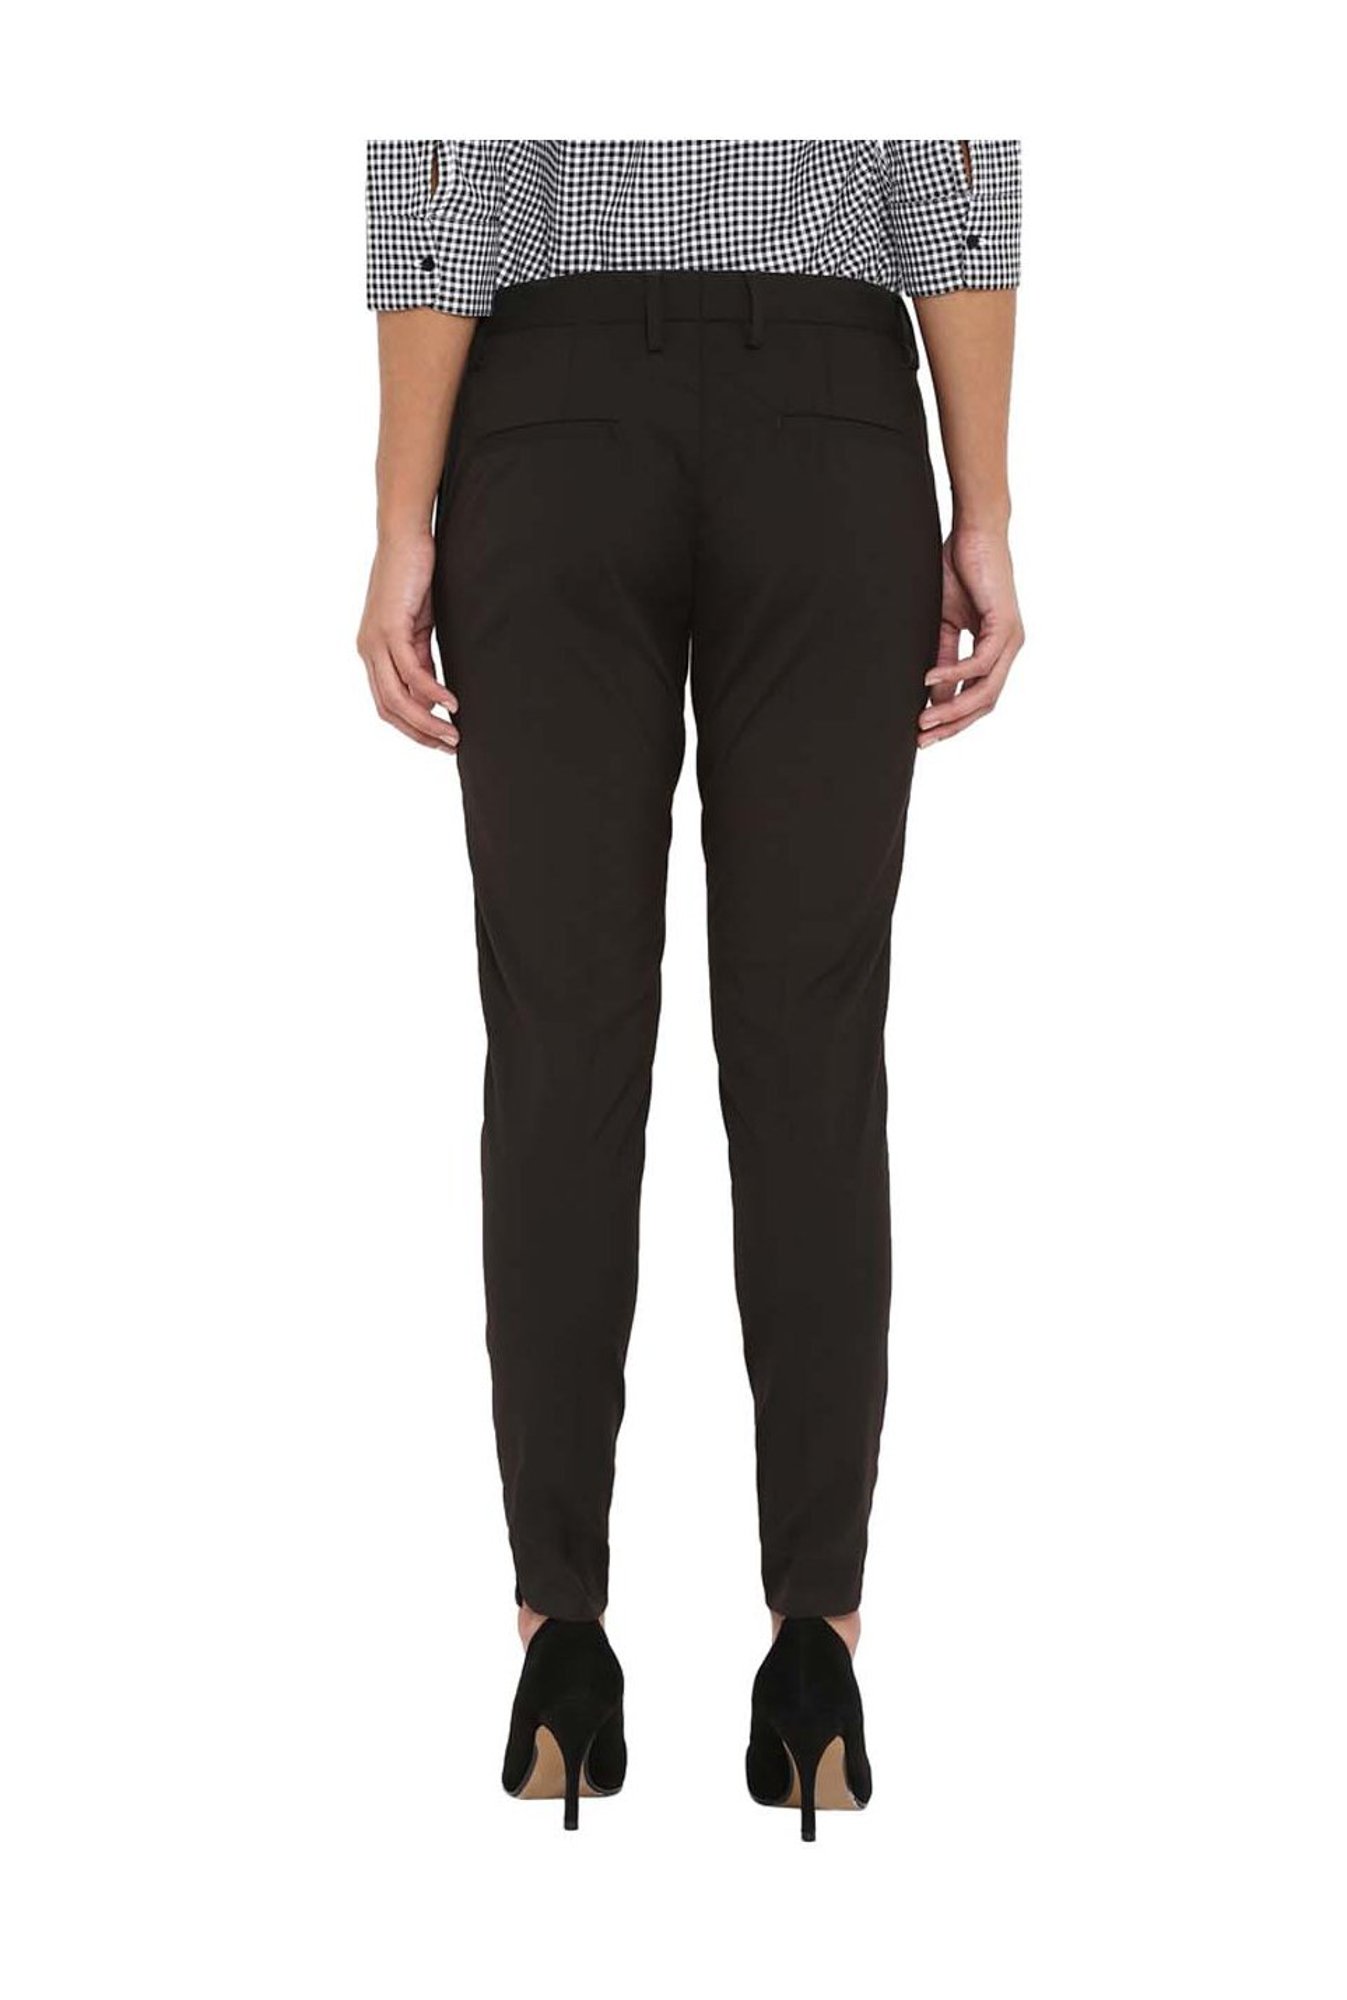 Samshek Trousers and Pants  Buy Samshek Formal Black Straight Pants Online   Nykaa Fashion